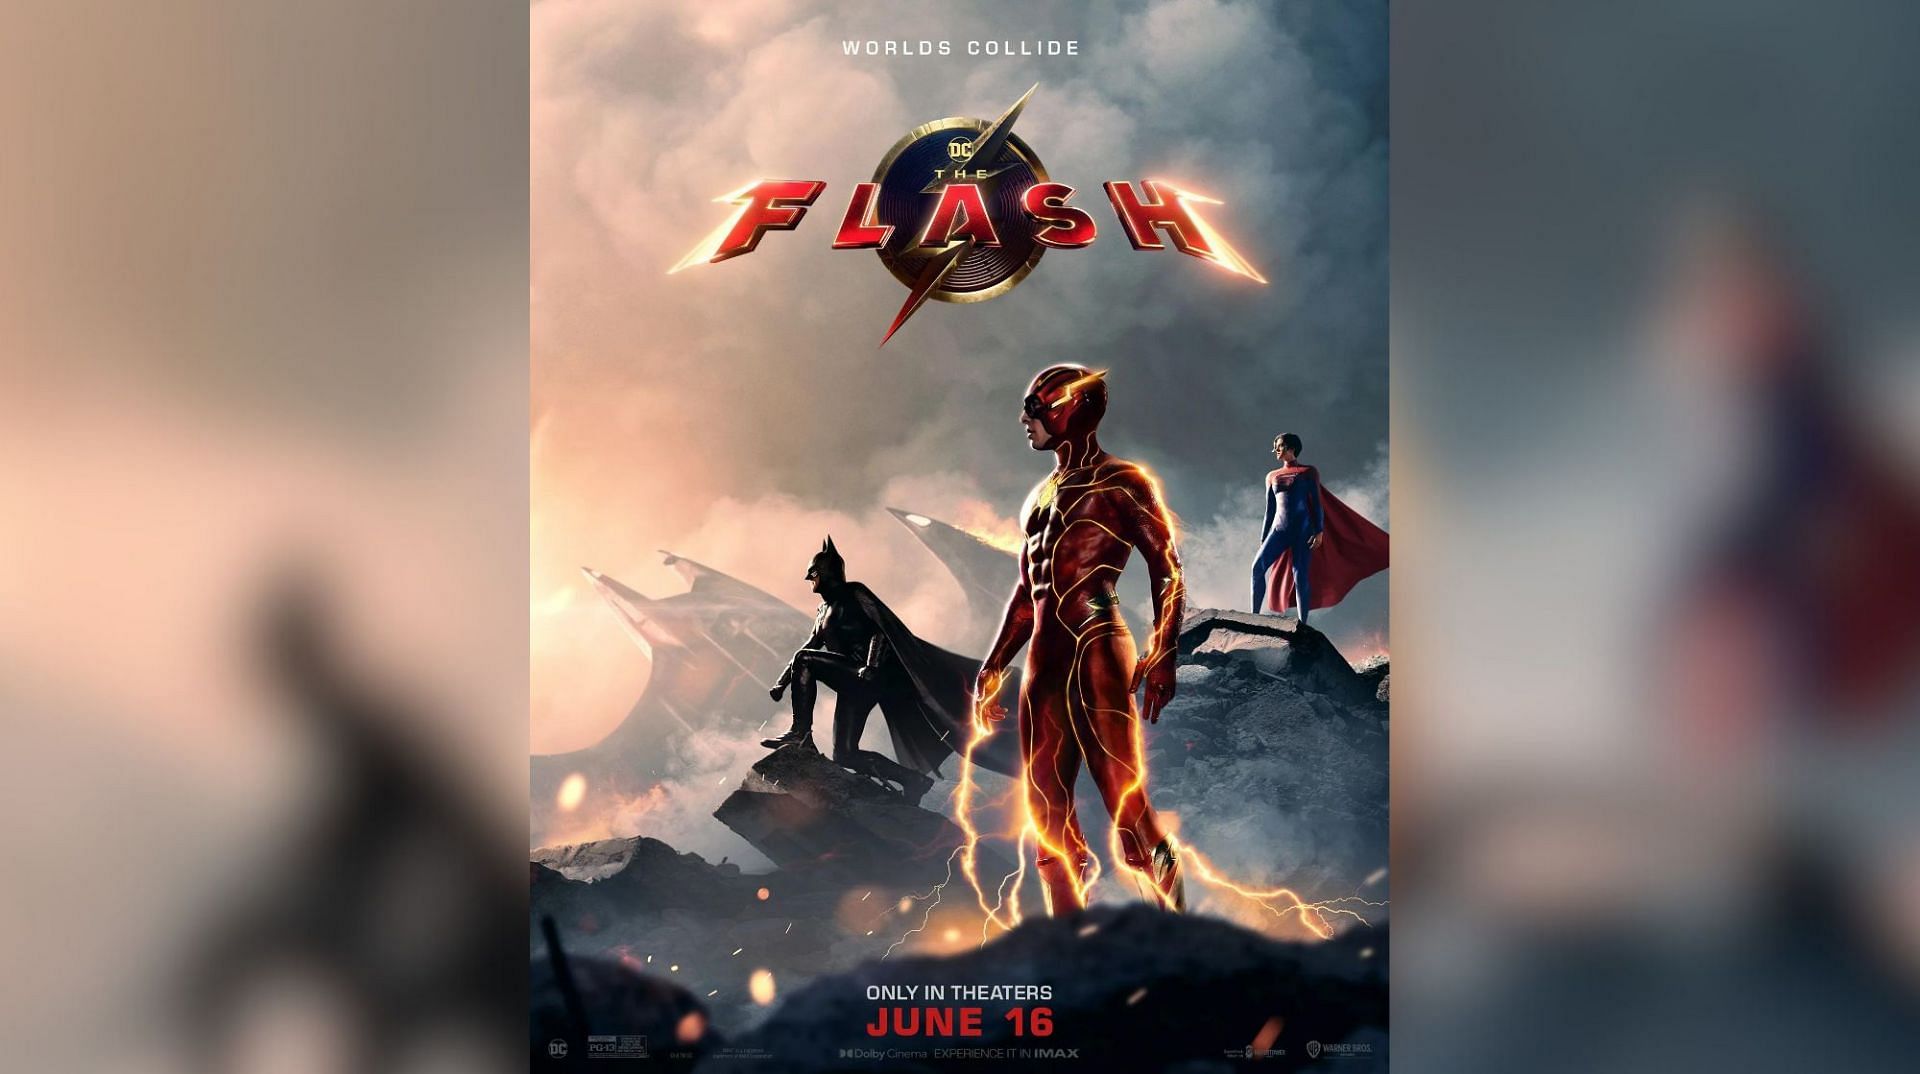 The Flash (Image via Warner Bros.)